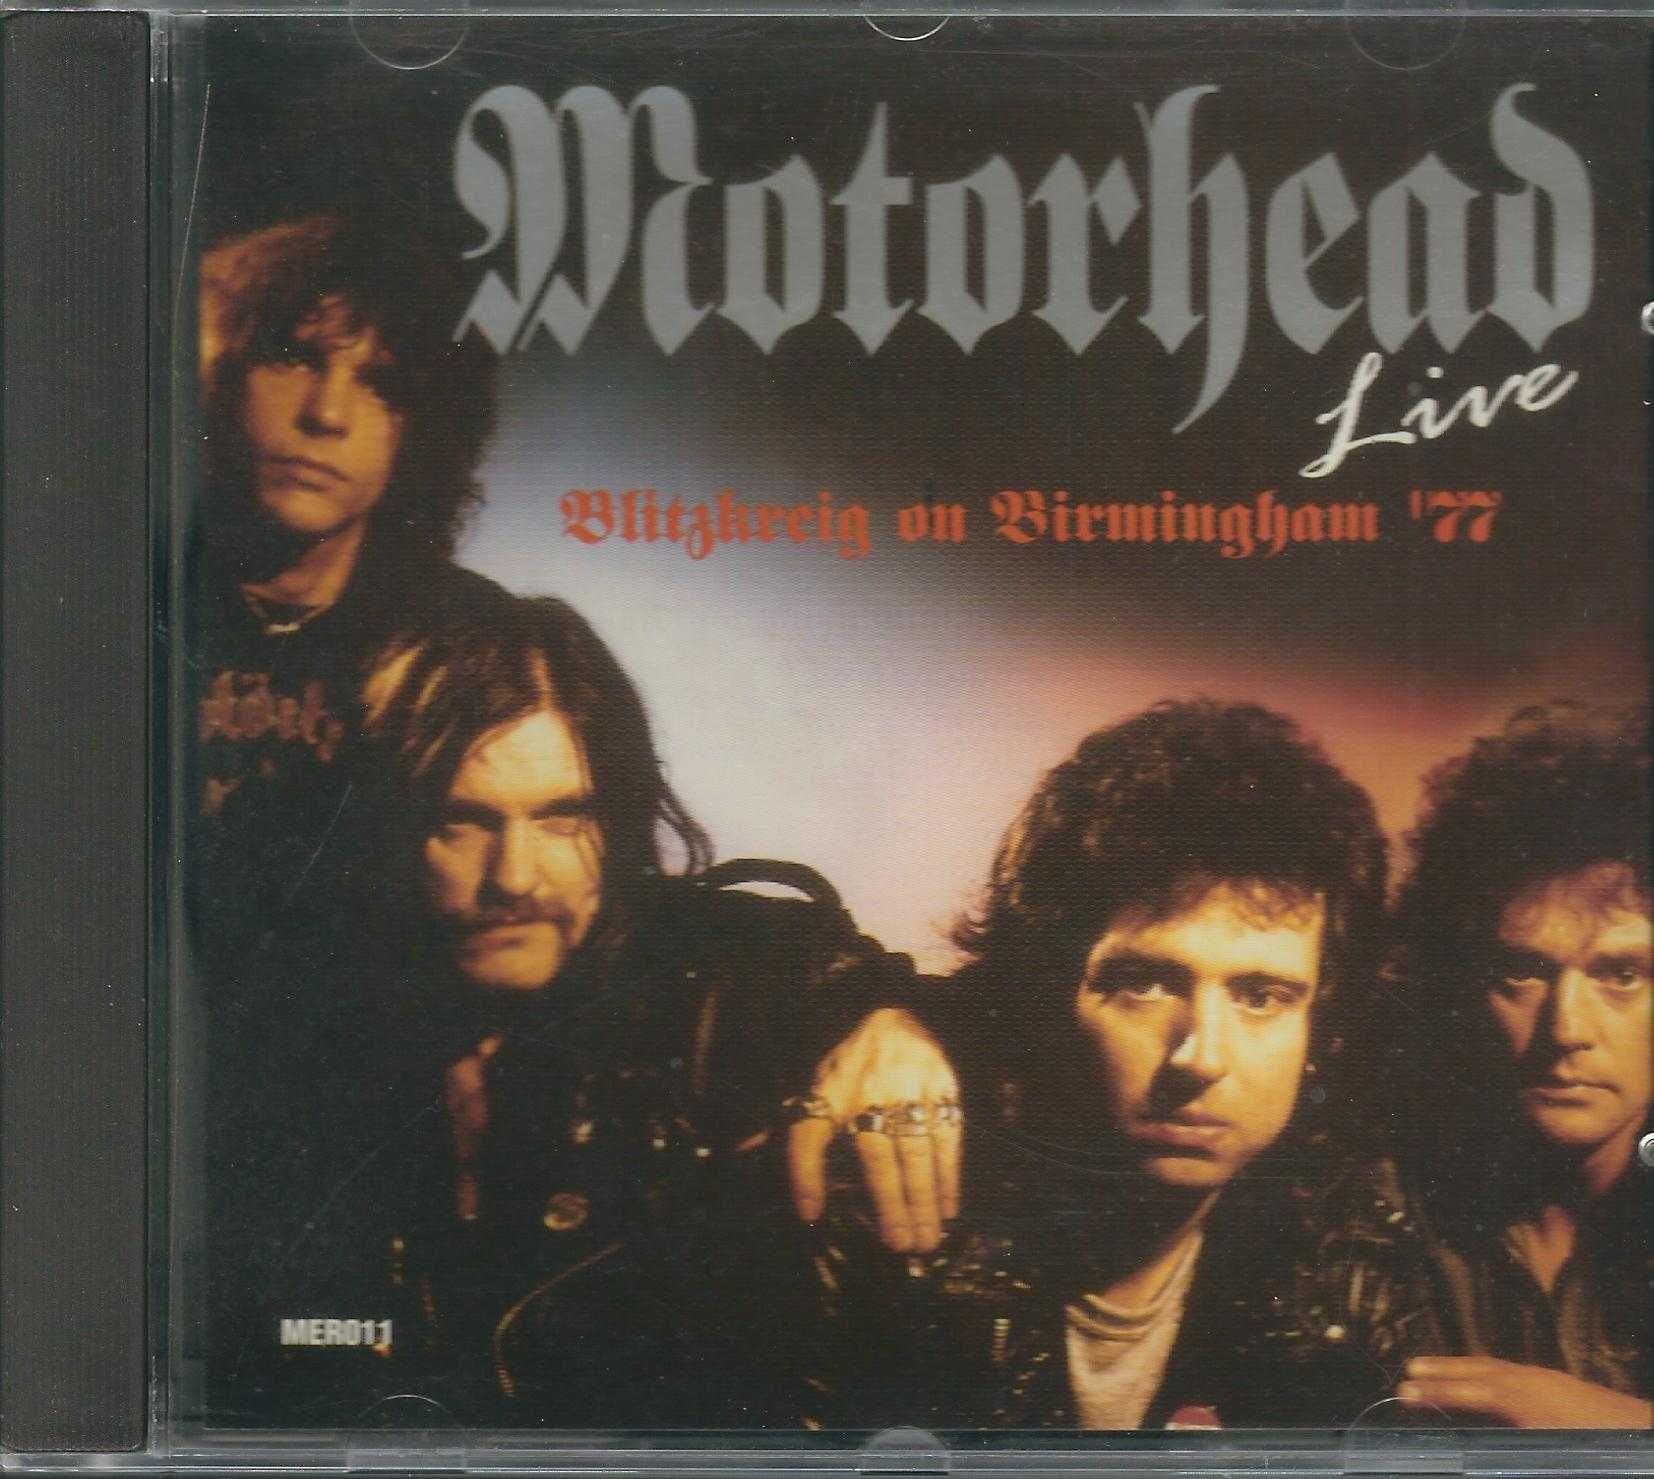 CD Motorhead - Live Blitzkreig On Birmingham '77 (1993)